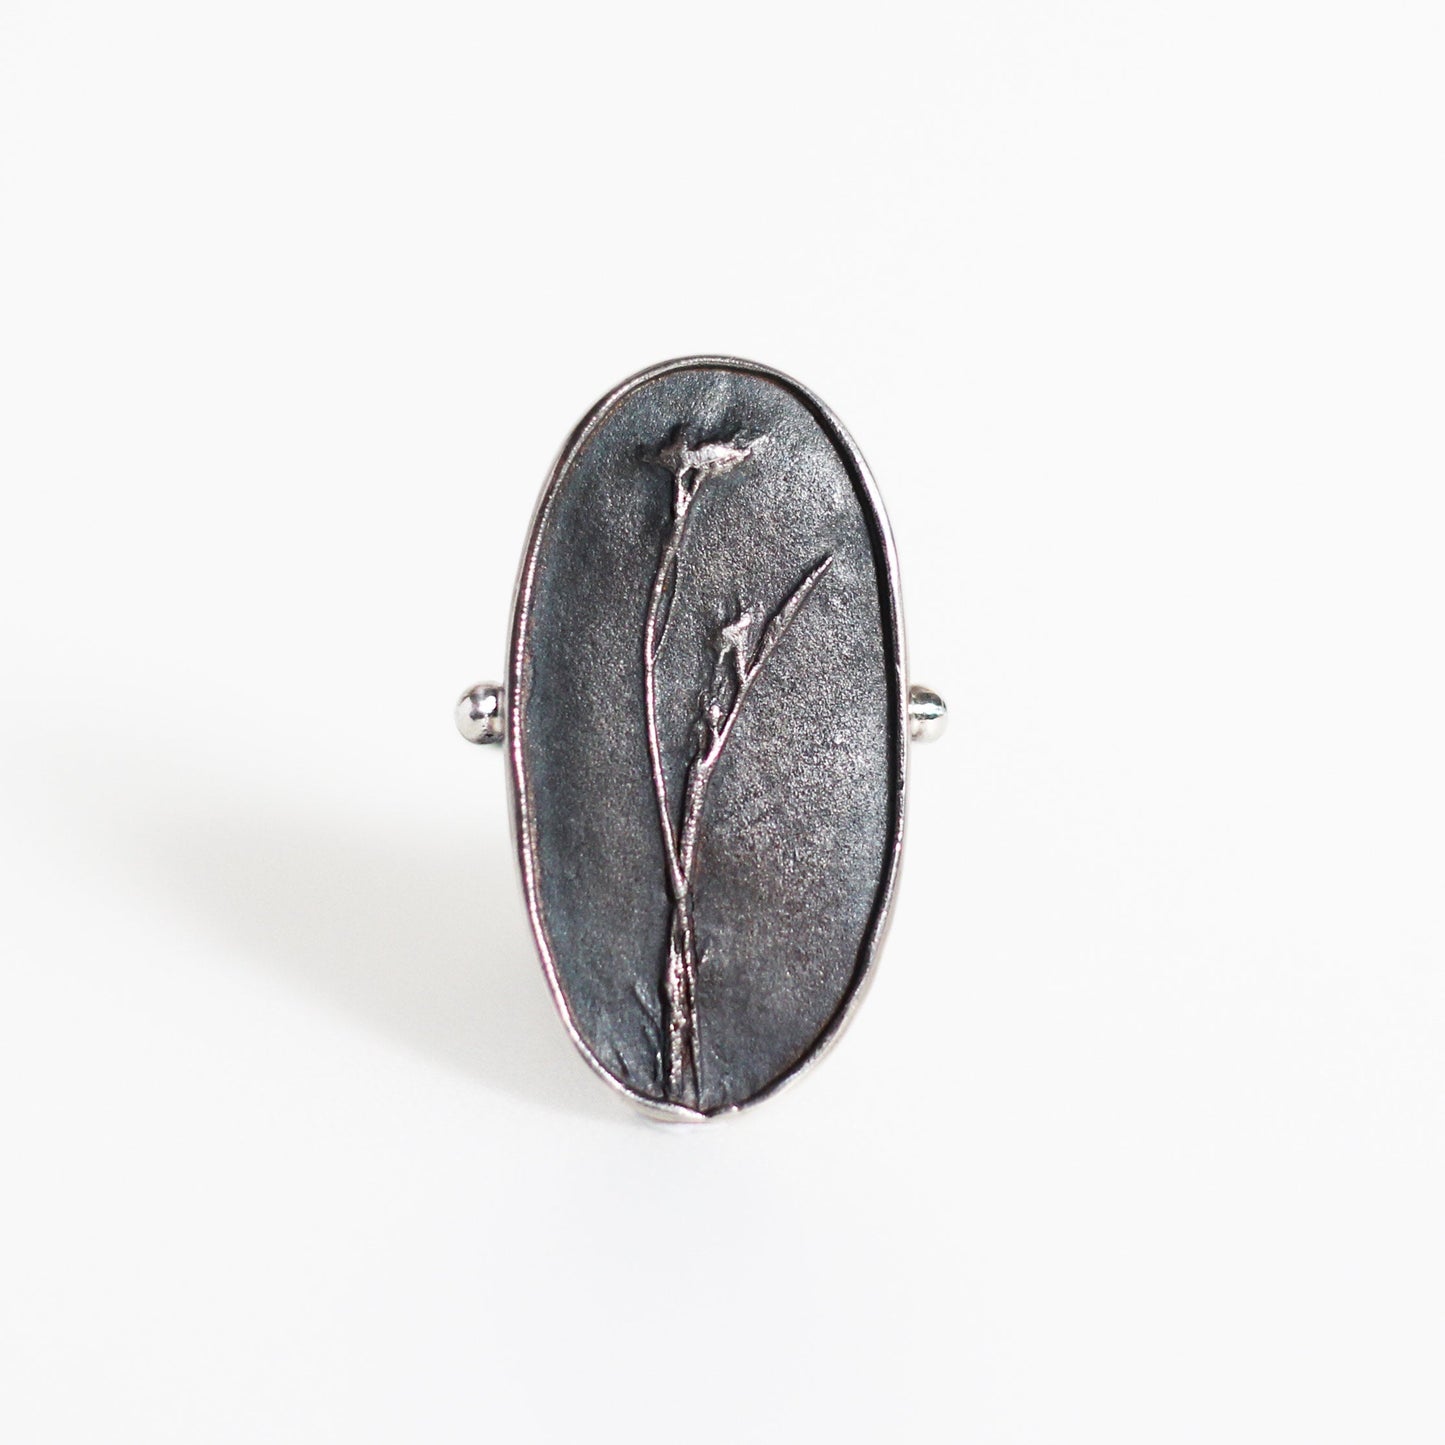 Fossil Large Mini Daisy Ring - Oxidised Silver - Aisling Chou Studio